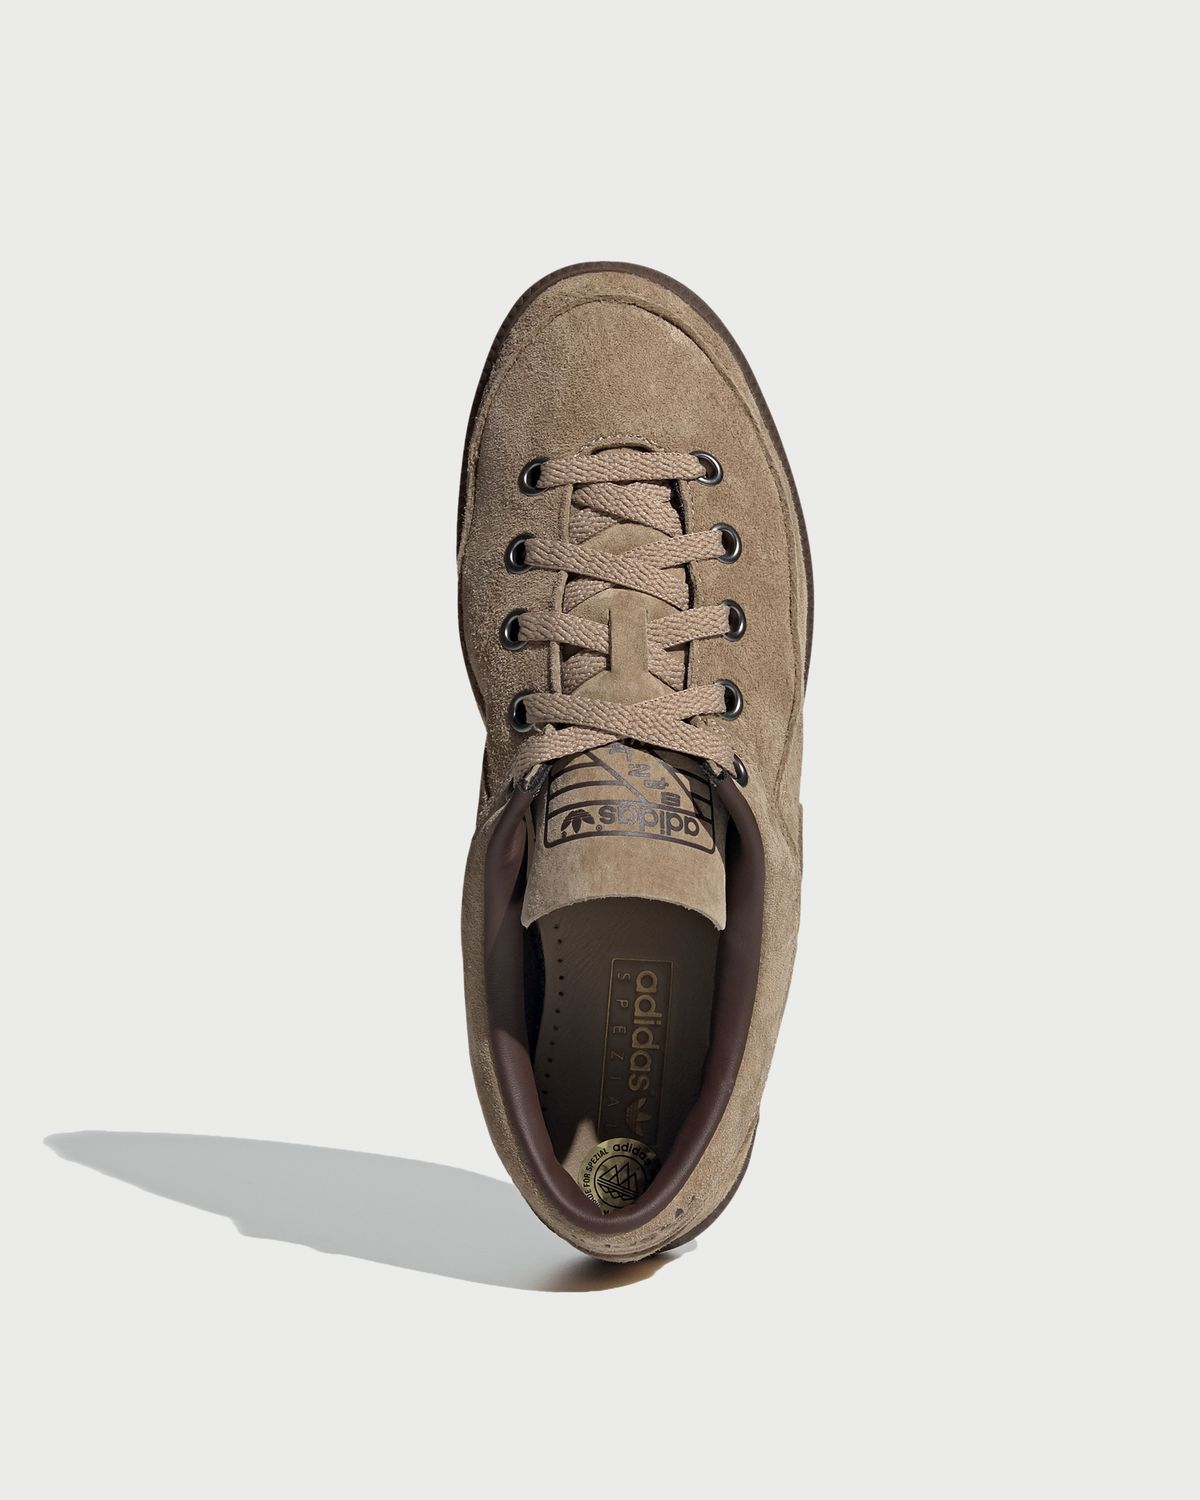 Adidas – Newrad Spezial Brown - Low Top Sneakers - Brown - Image 3